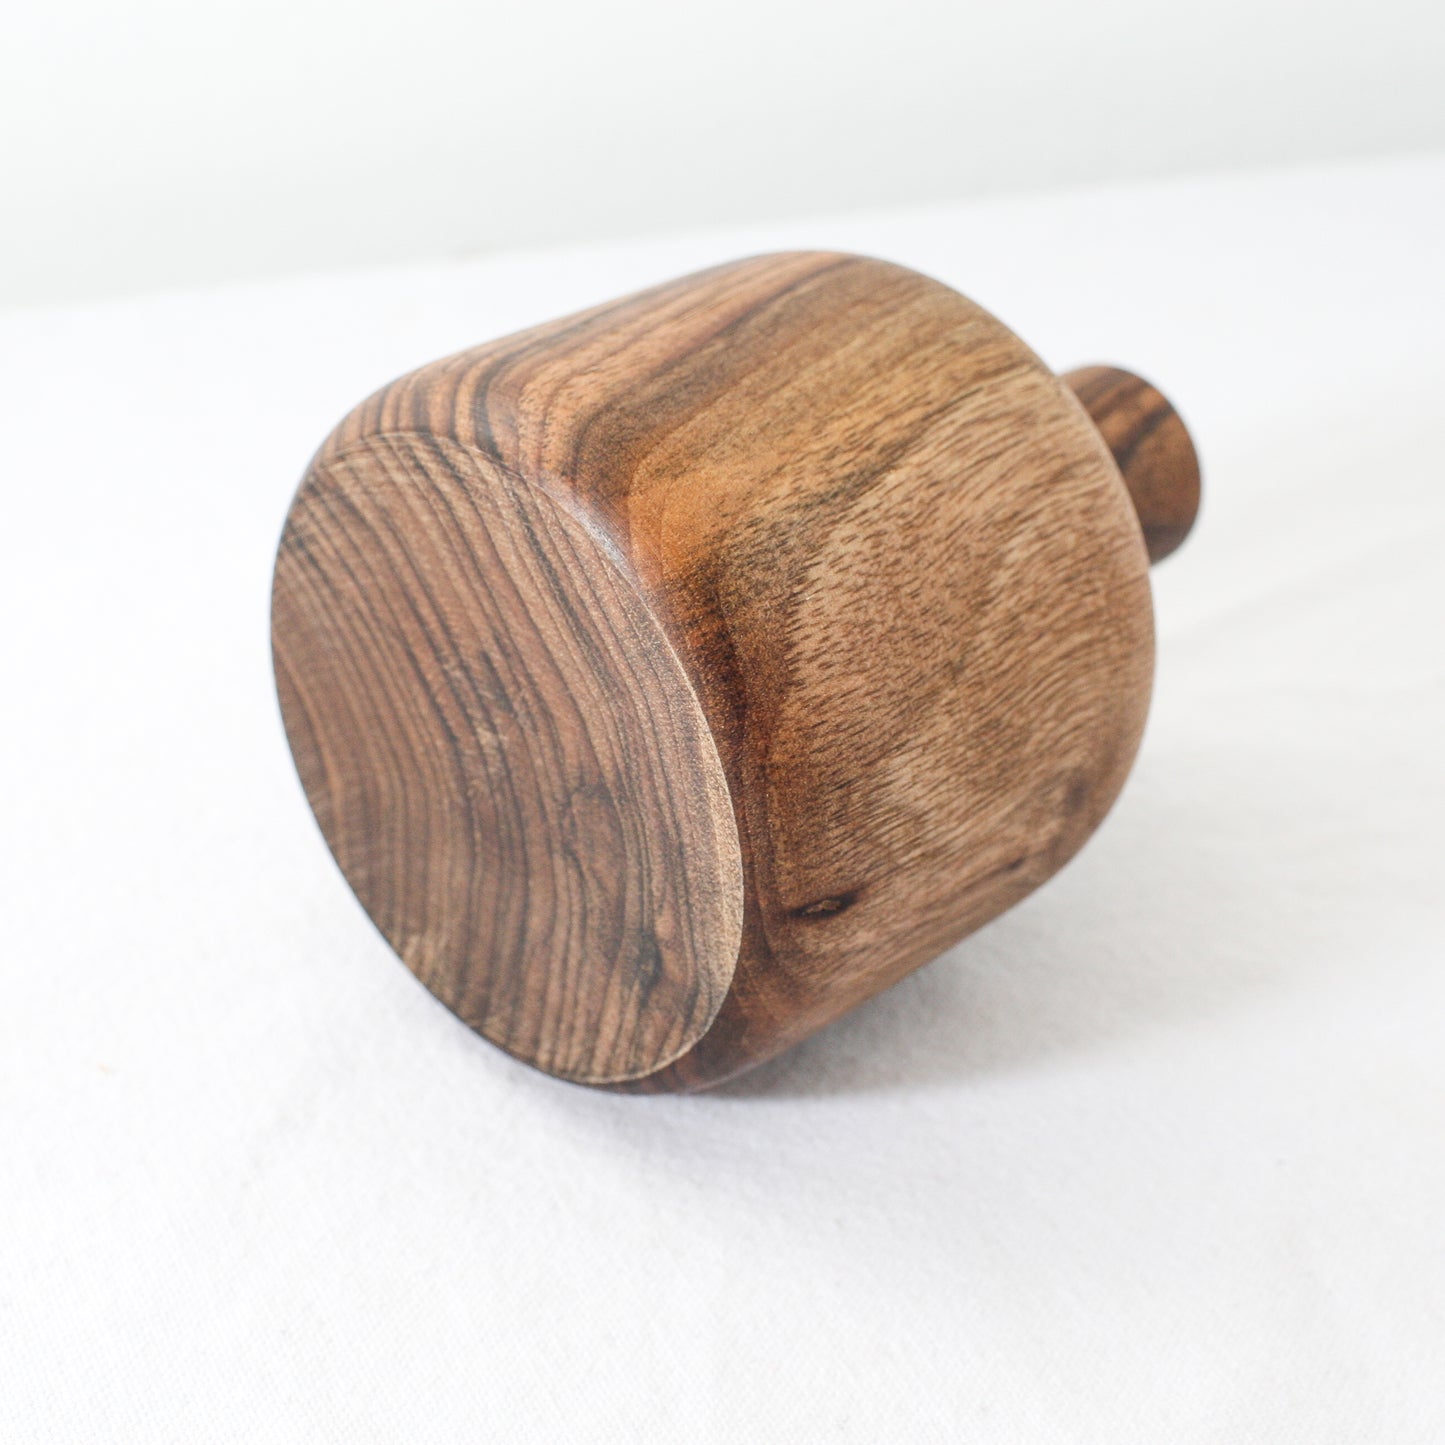 Walnut Wood Vase Small